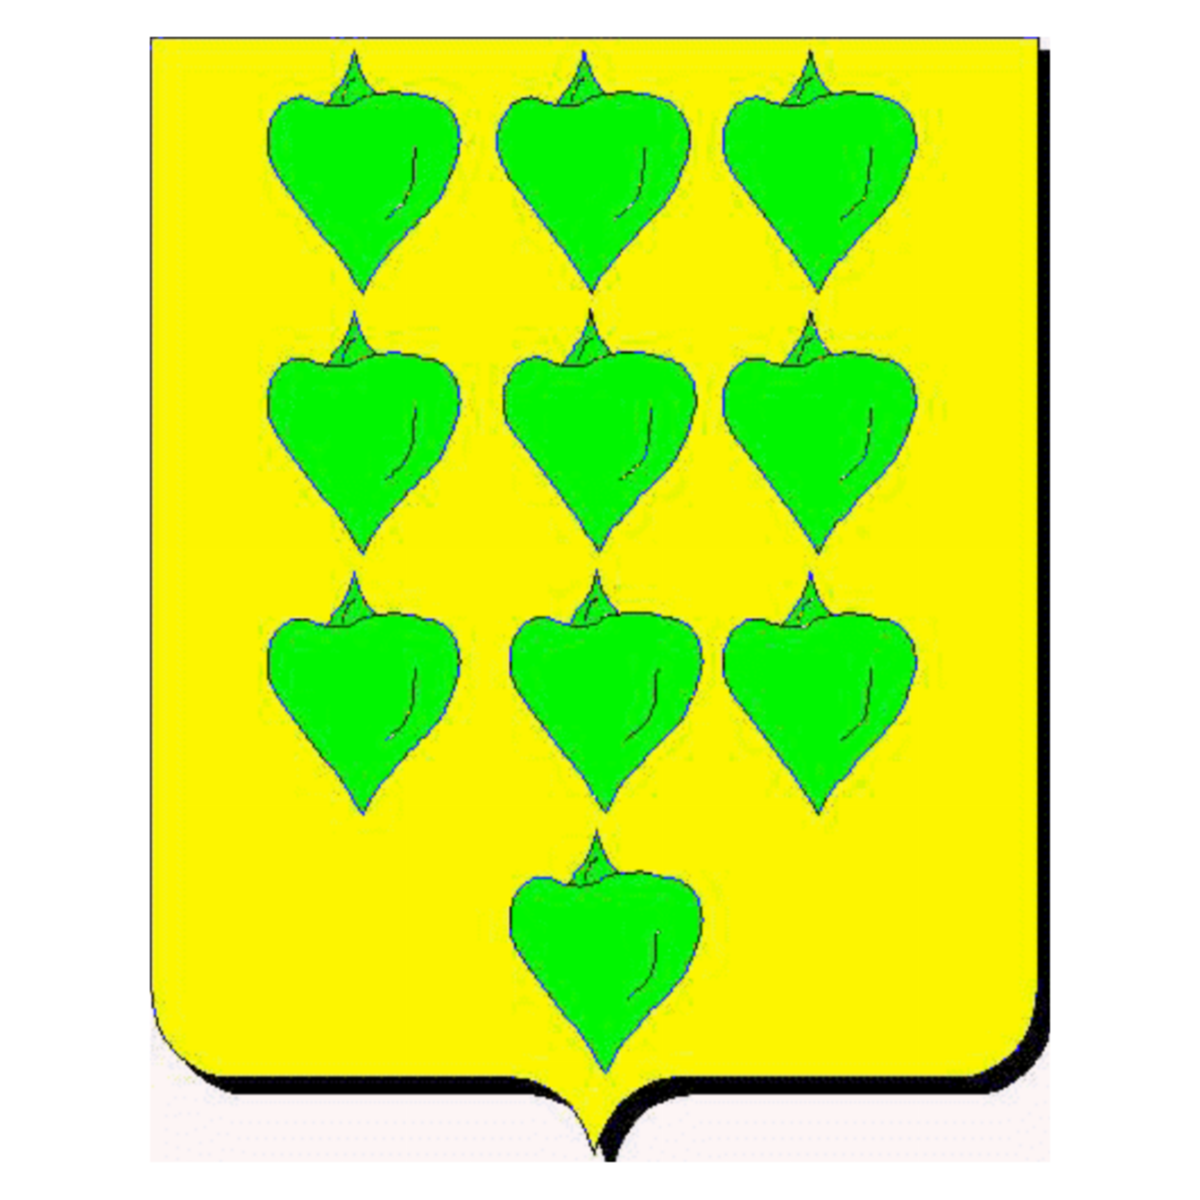 Coat of arms of familyMuguerza